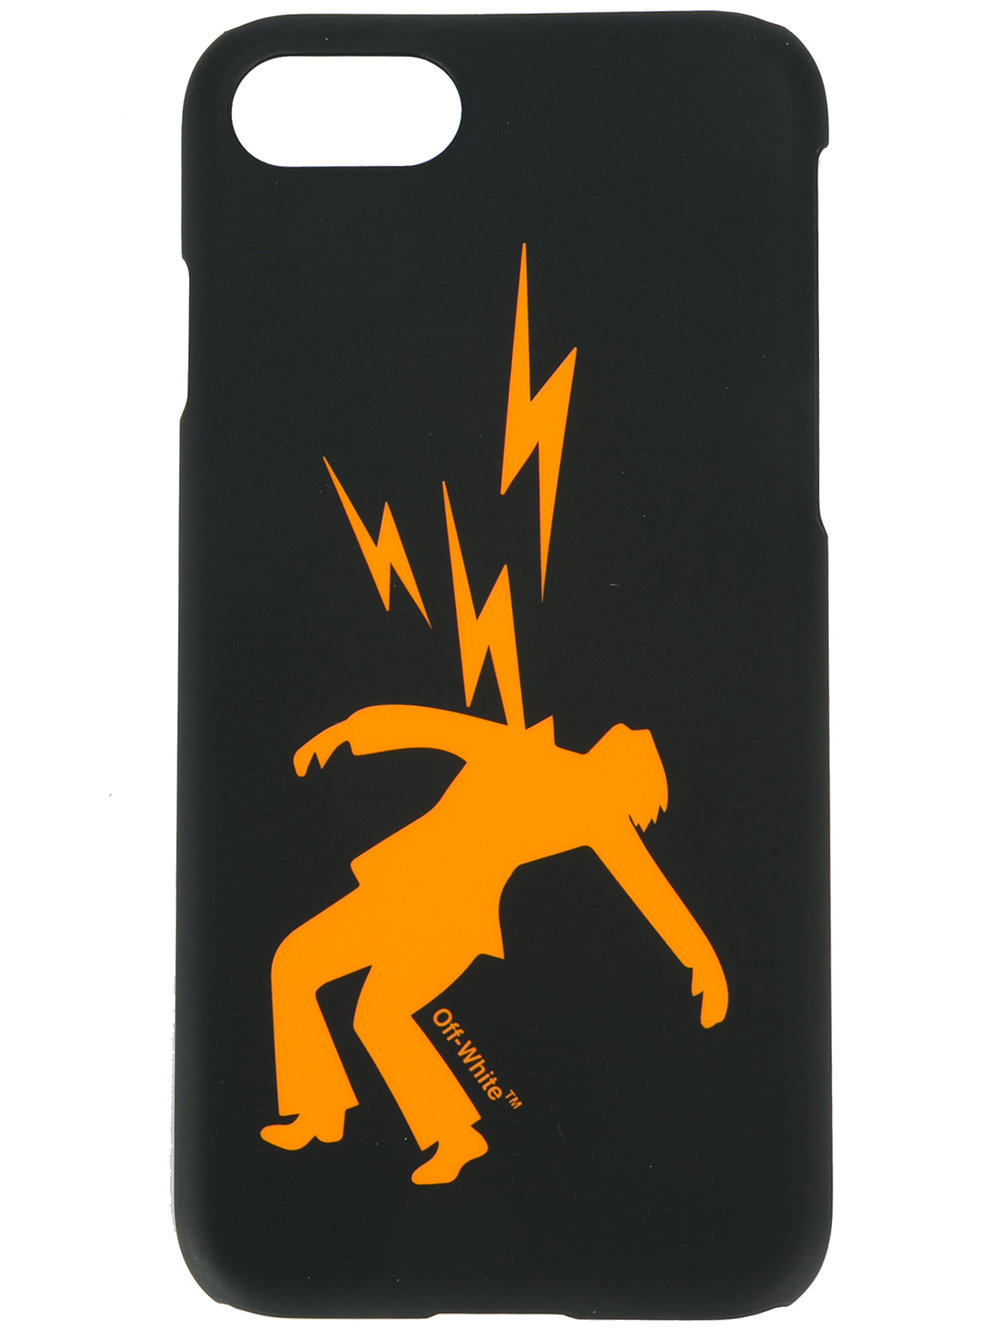 Off-White electric shock print iPhone 7 case 1019 BLACK ORANGE Men Lifestyle Phone Computer & Gadgets